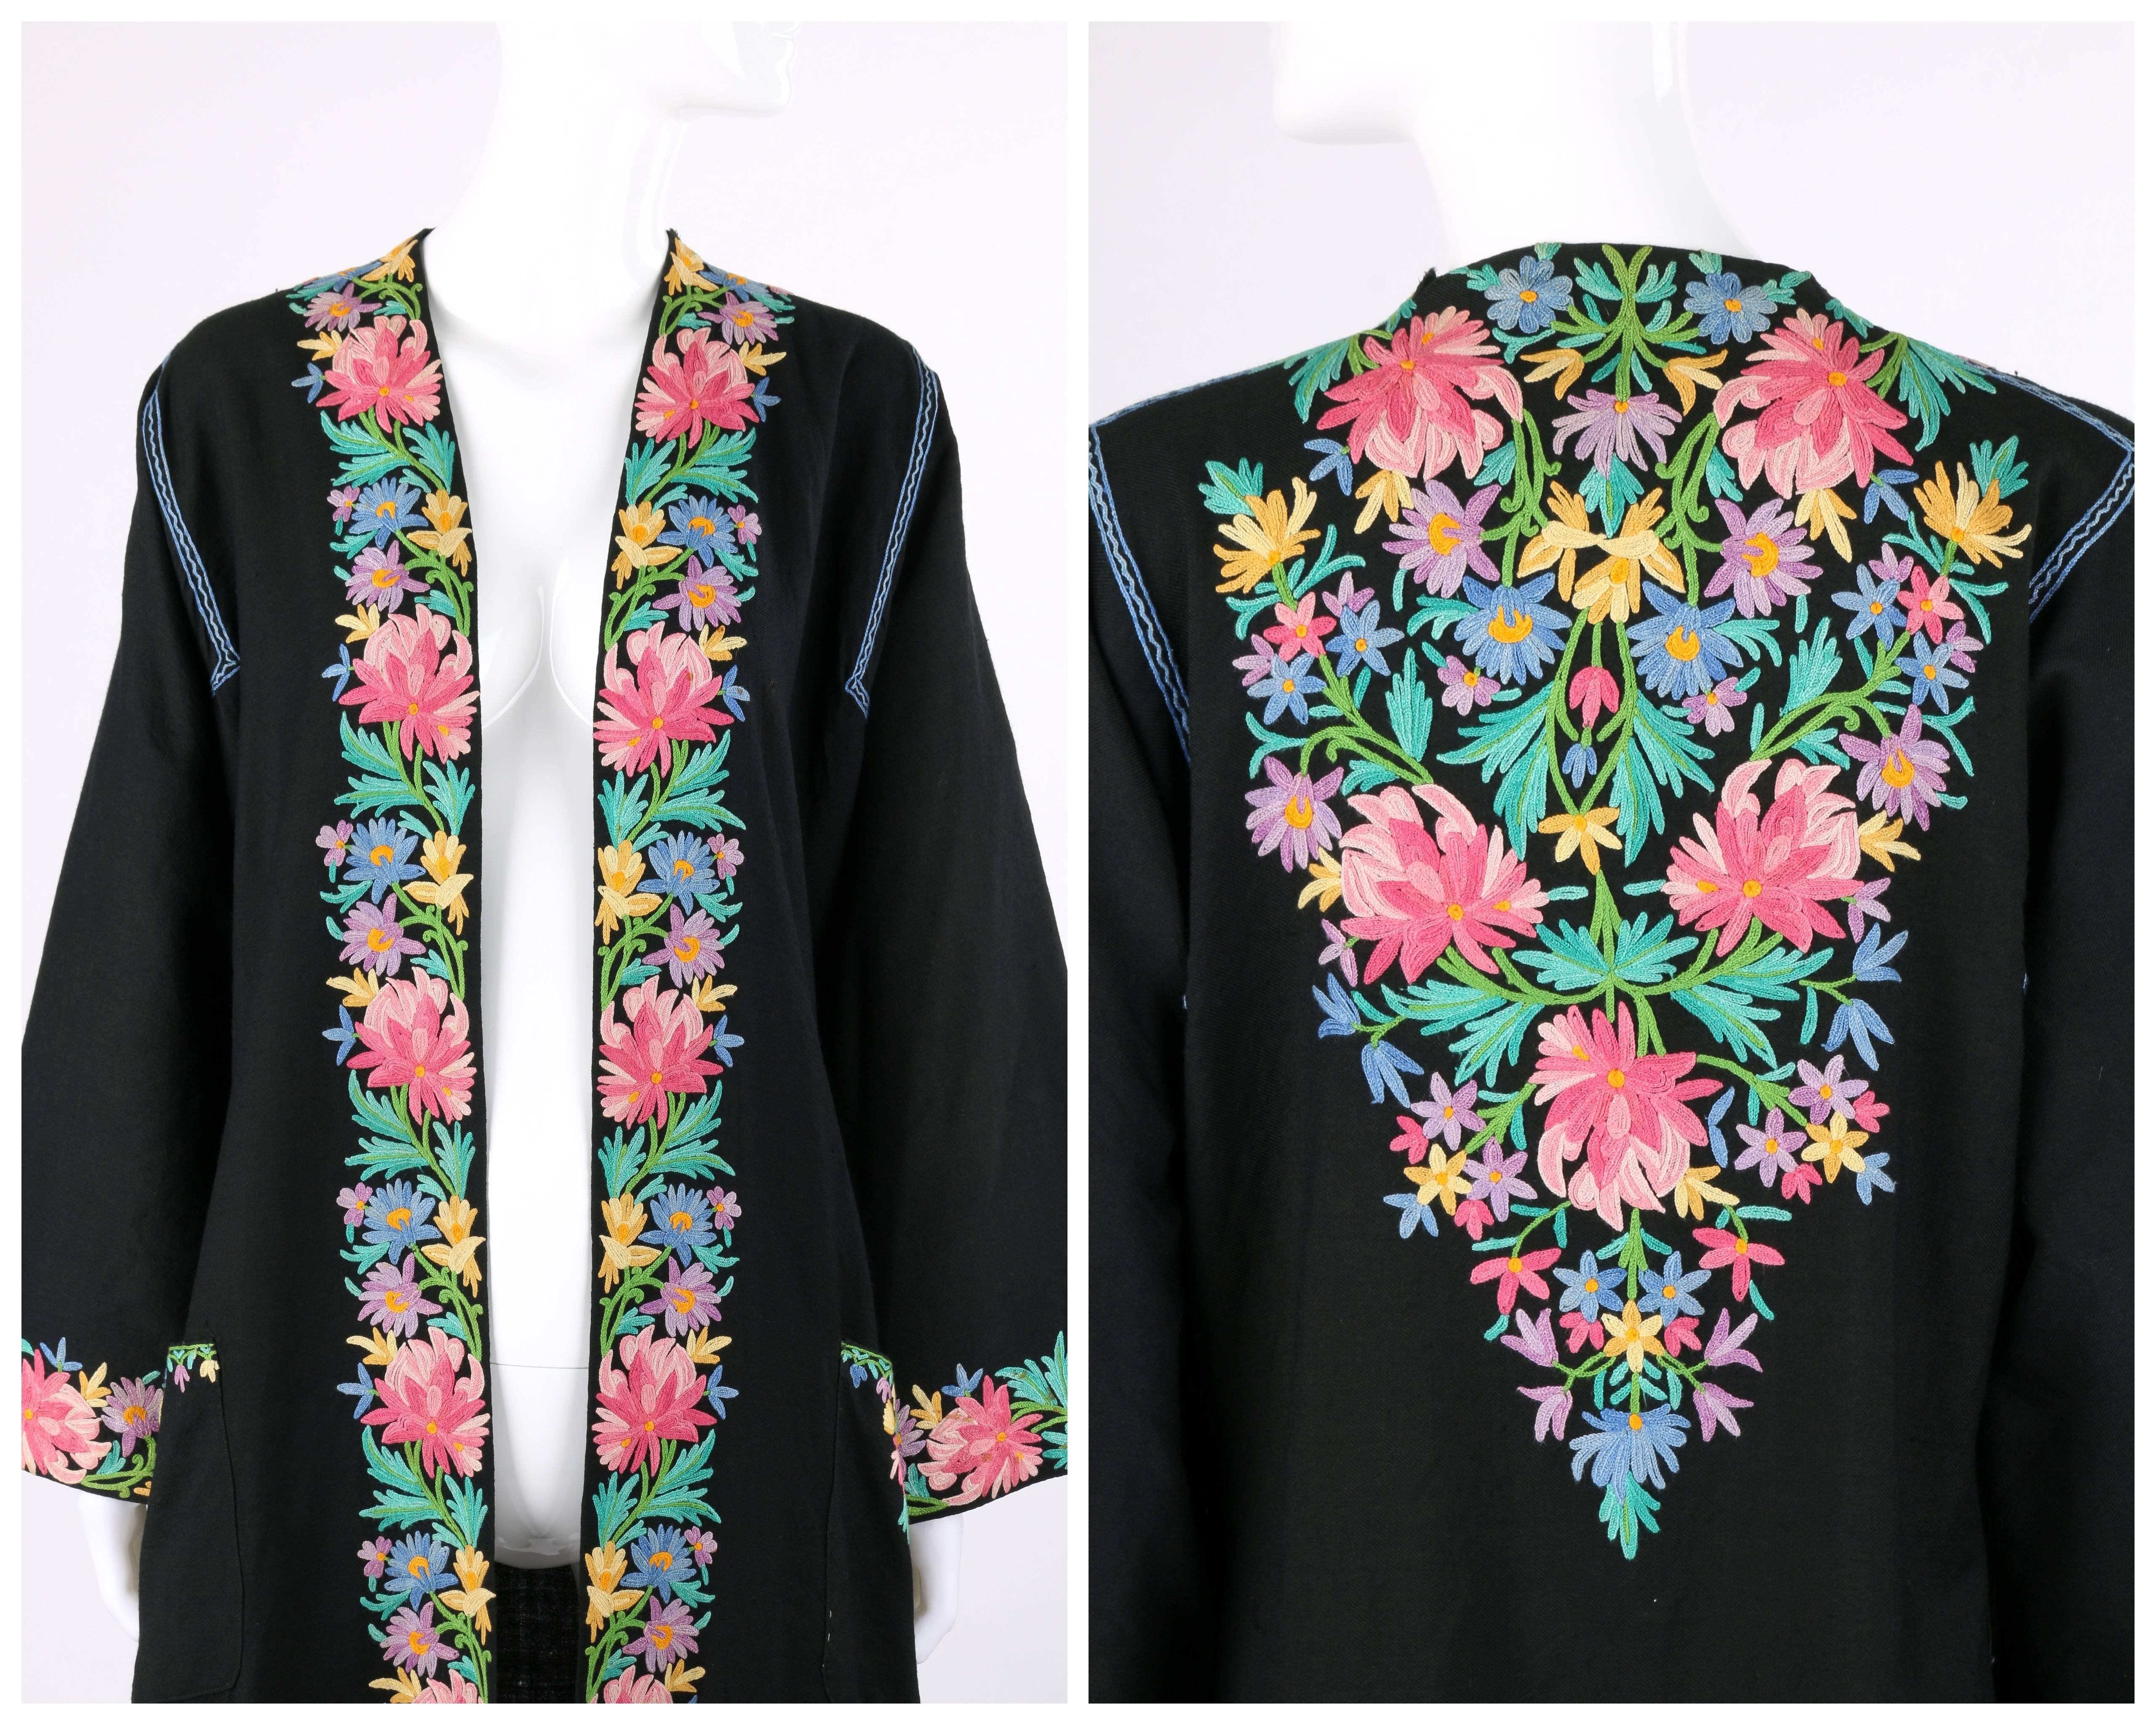 Vintage Subhana 'The Best' Srinagar black wool multi-colored floral Kashmiri embroidered robe / coat. Multi-colored crewel embroidery in a floral Kashmiri design along neckline, center front, cuffs, hem, shoulders, top of back and pockets in shades